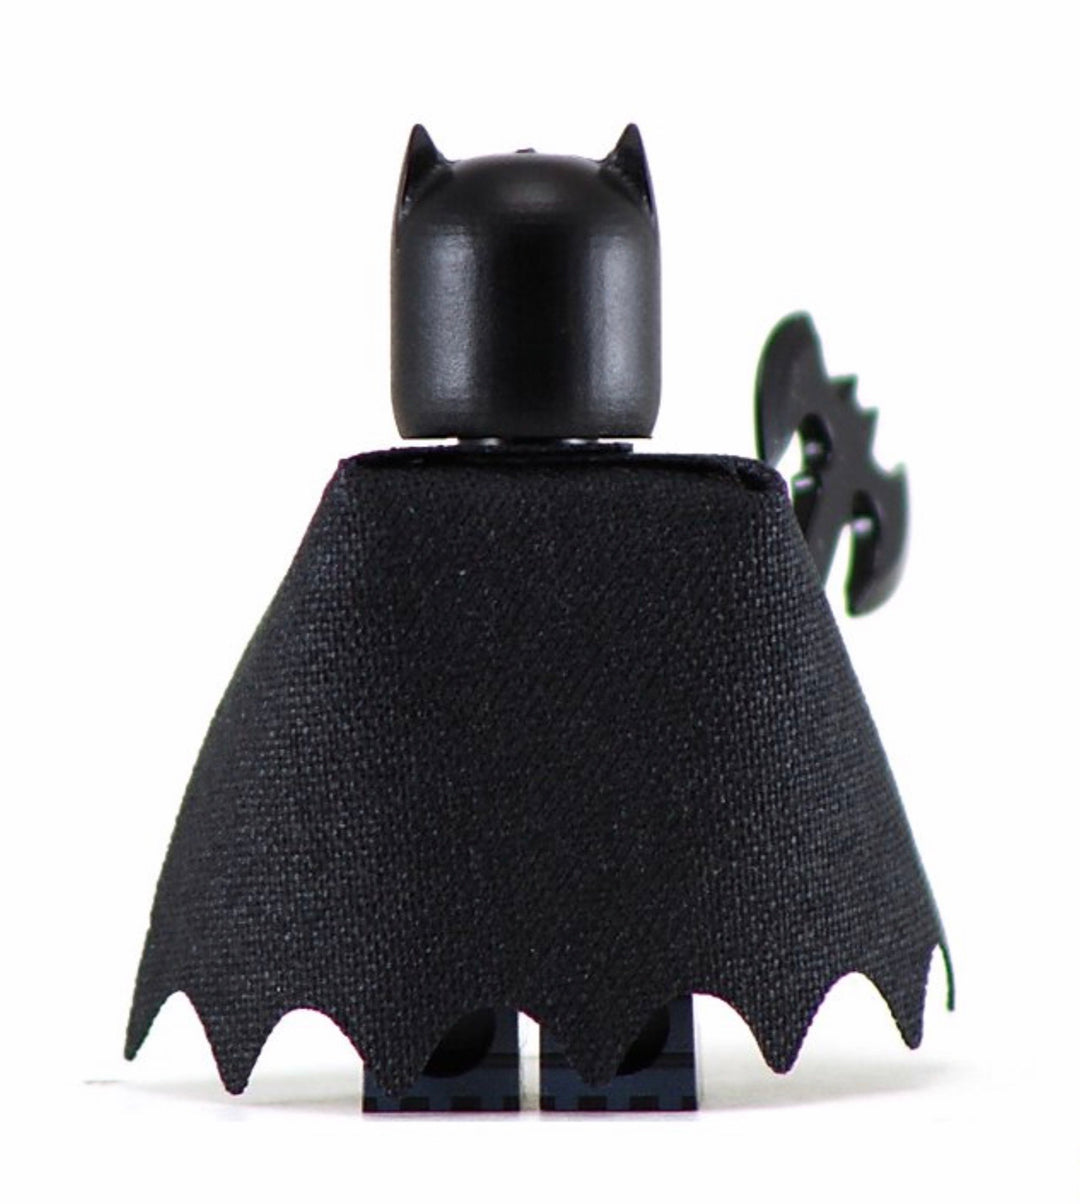 Batman Beyond Custom Printed Minifigure – Atlanta Brick Co